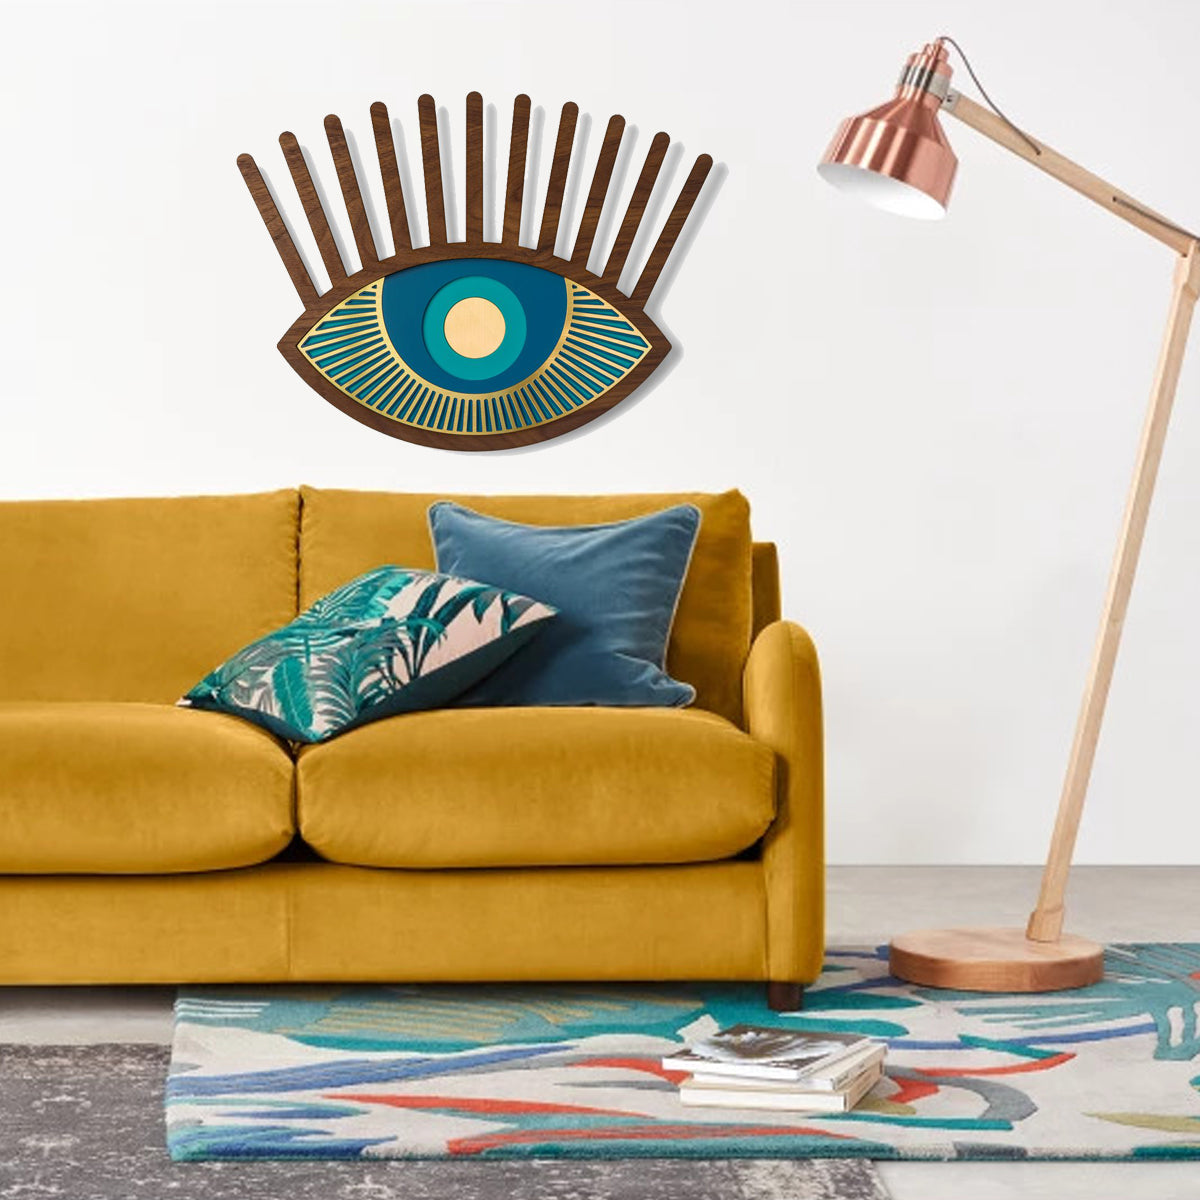 Living Room Wall Decor by Blue Eye Wood Wall Art